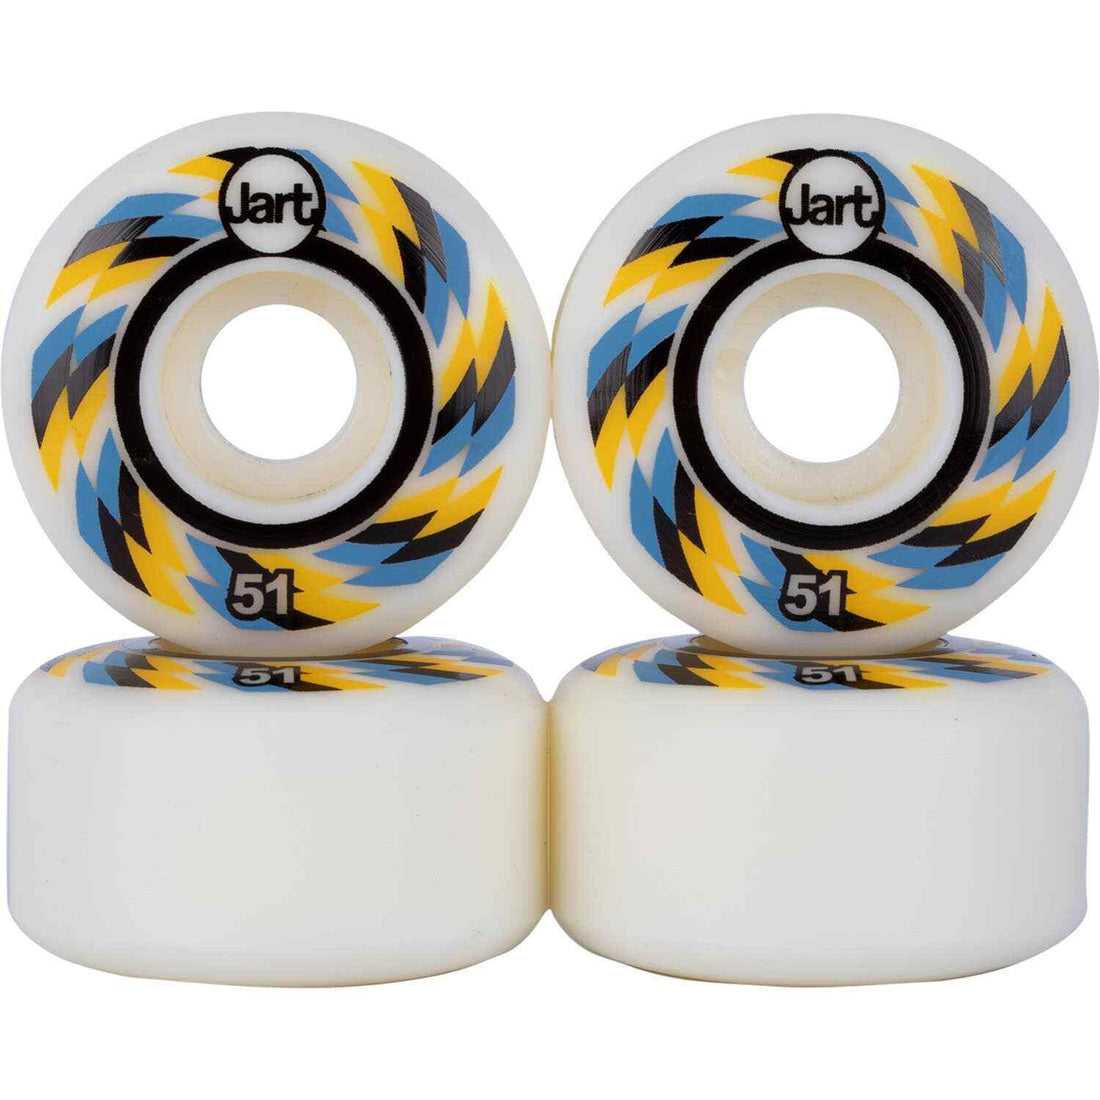 Jart Spiral Skateboard Wheels 51mm